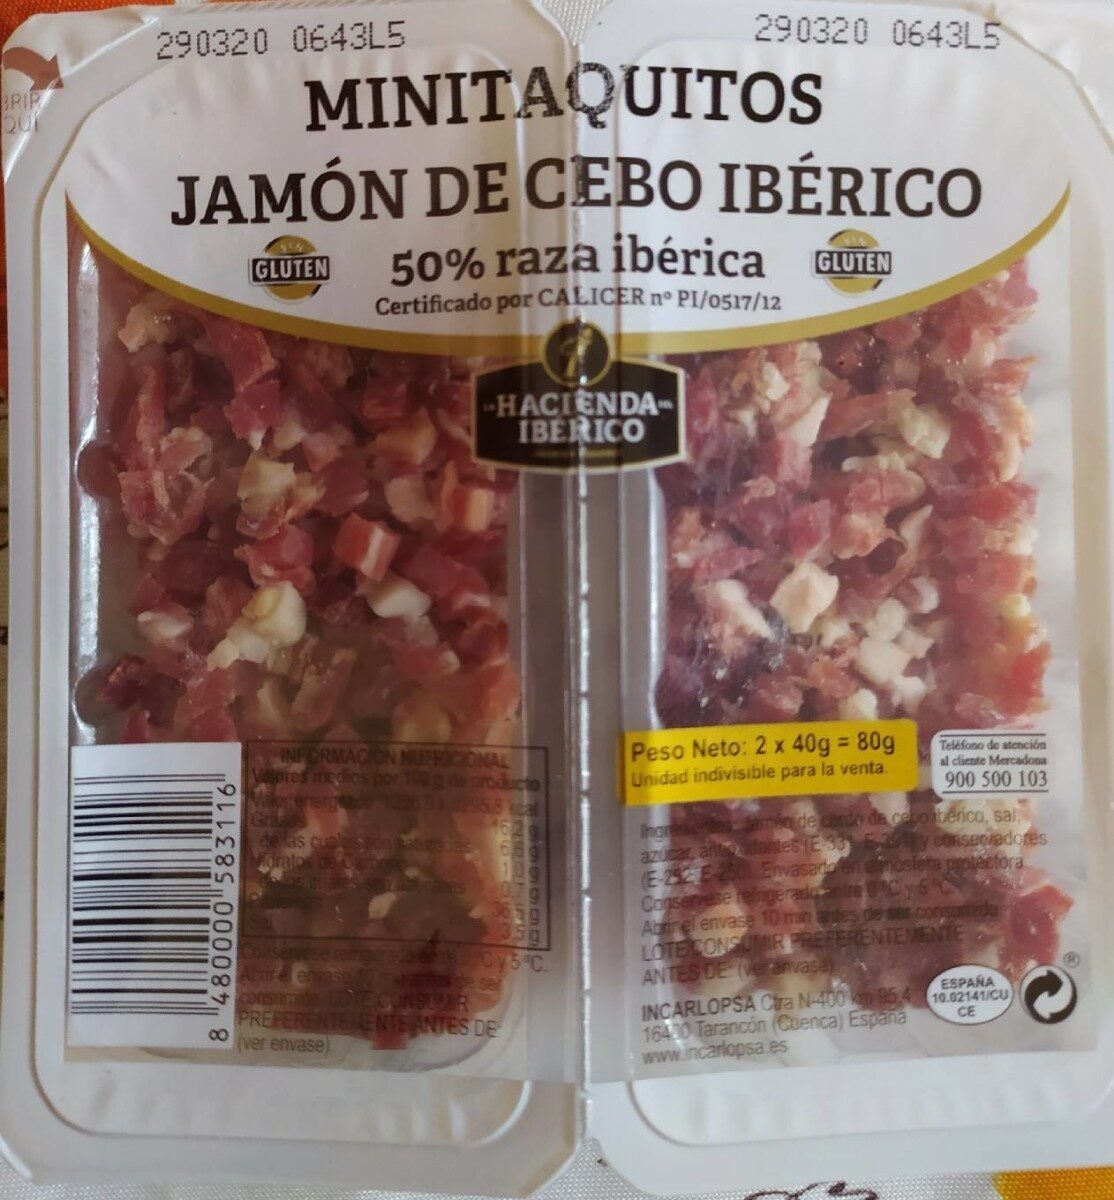 MINITAQUITOS JAMÓN DE CEBO IBÉRICO - Produktua - es